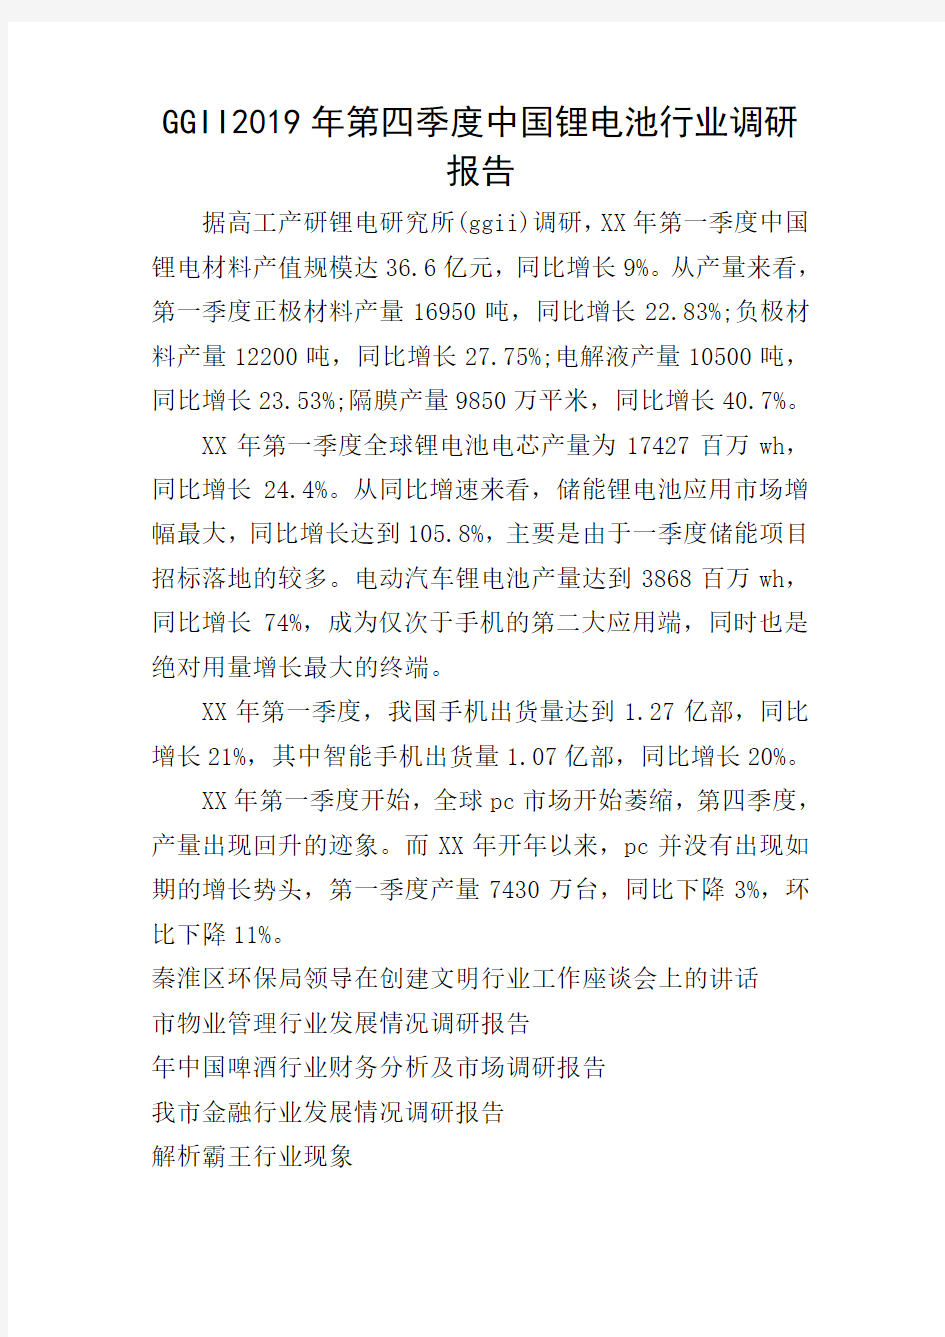 GGII2019年第四季度中国锂电池行业调研报告